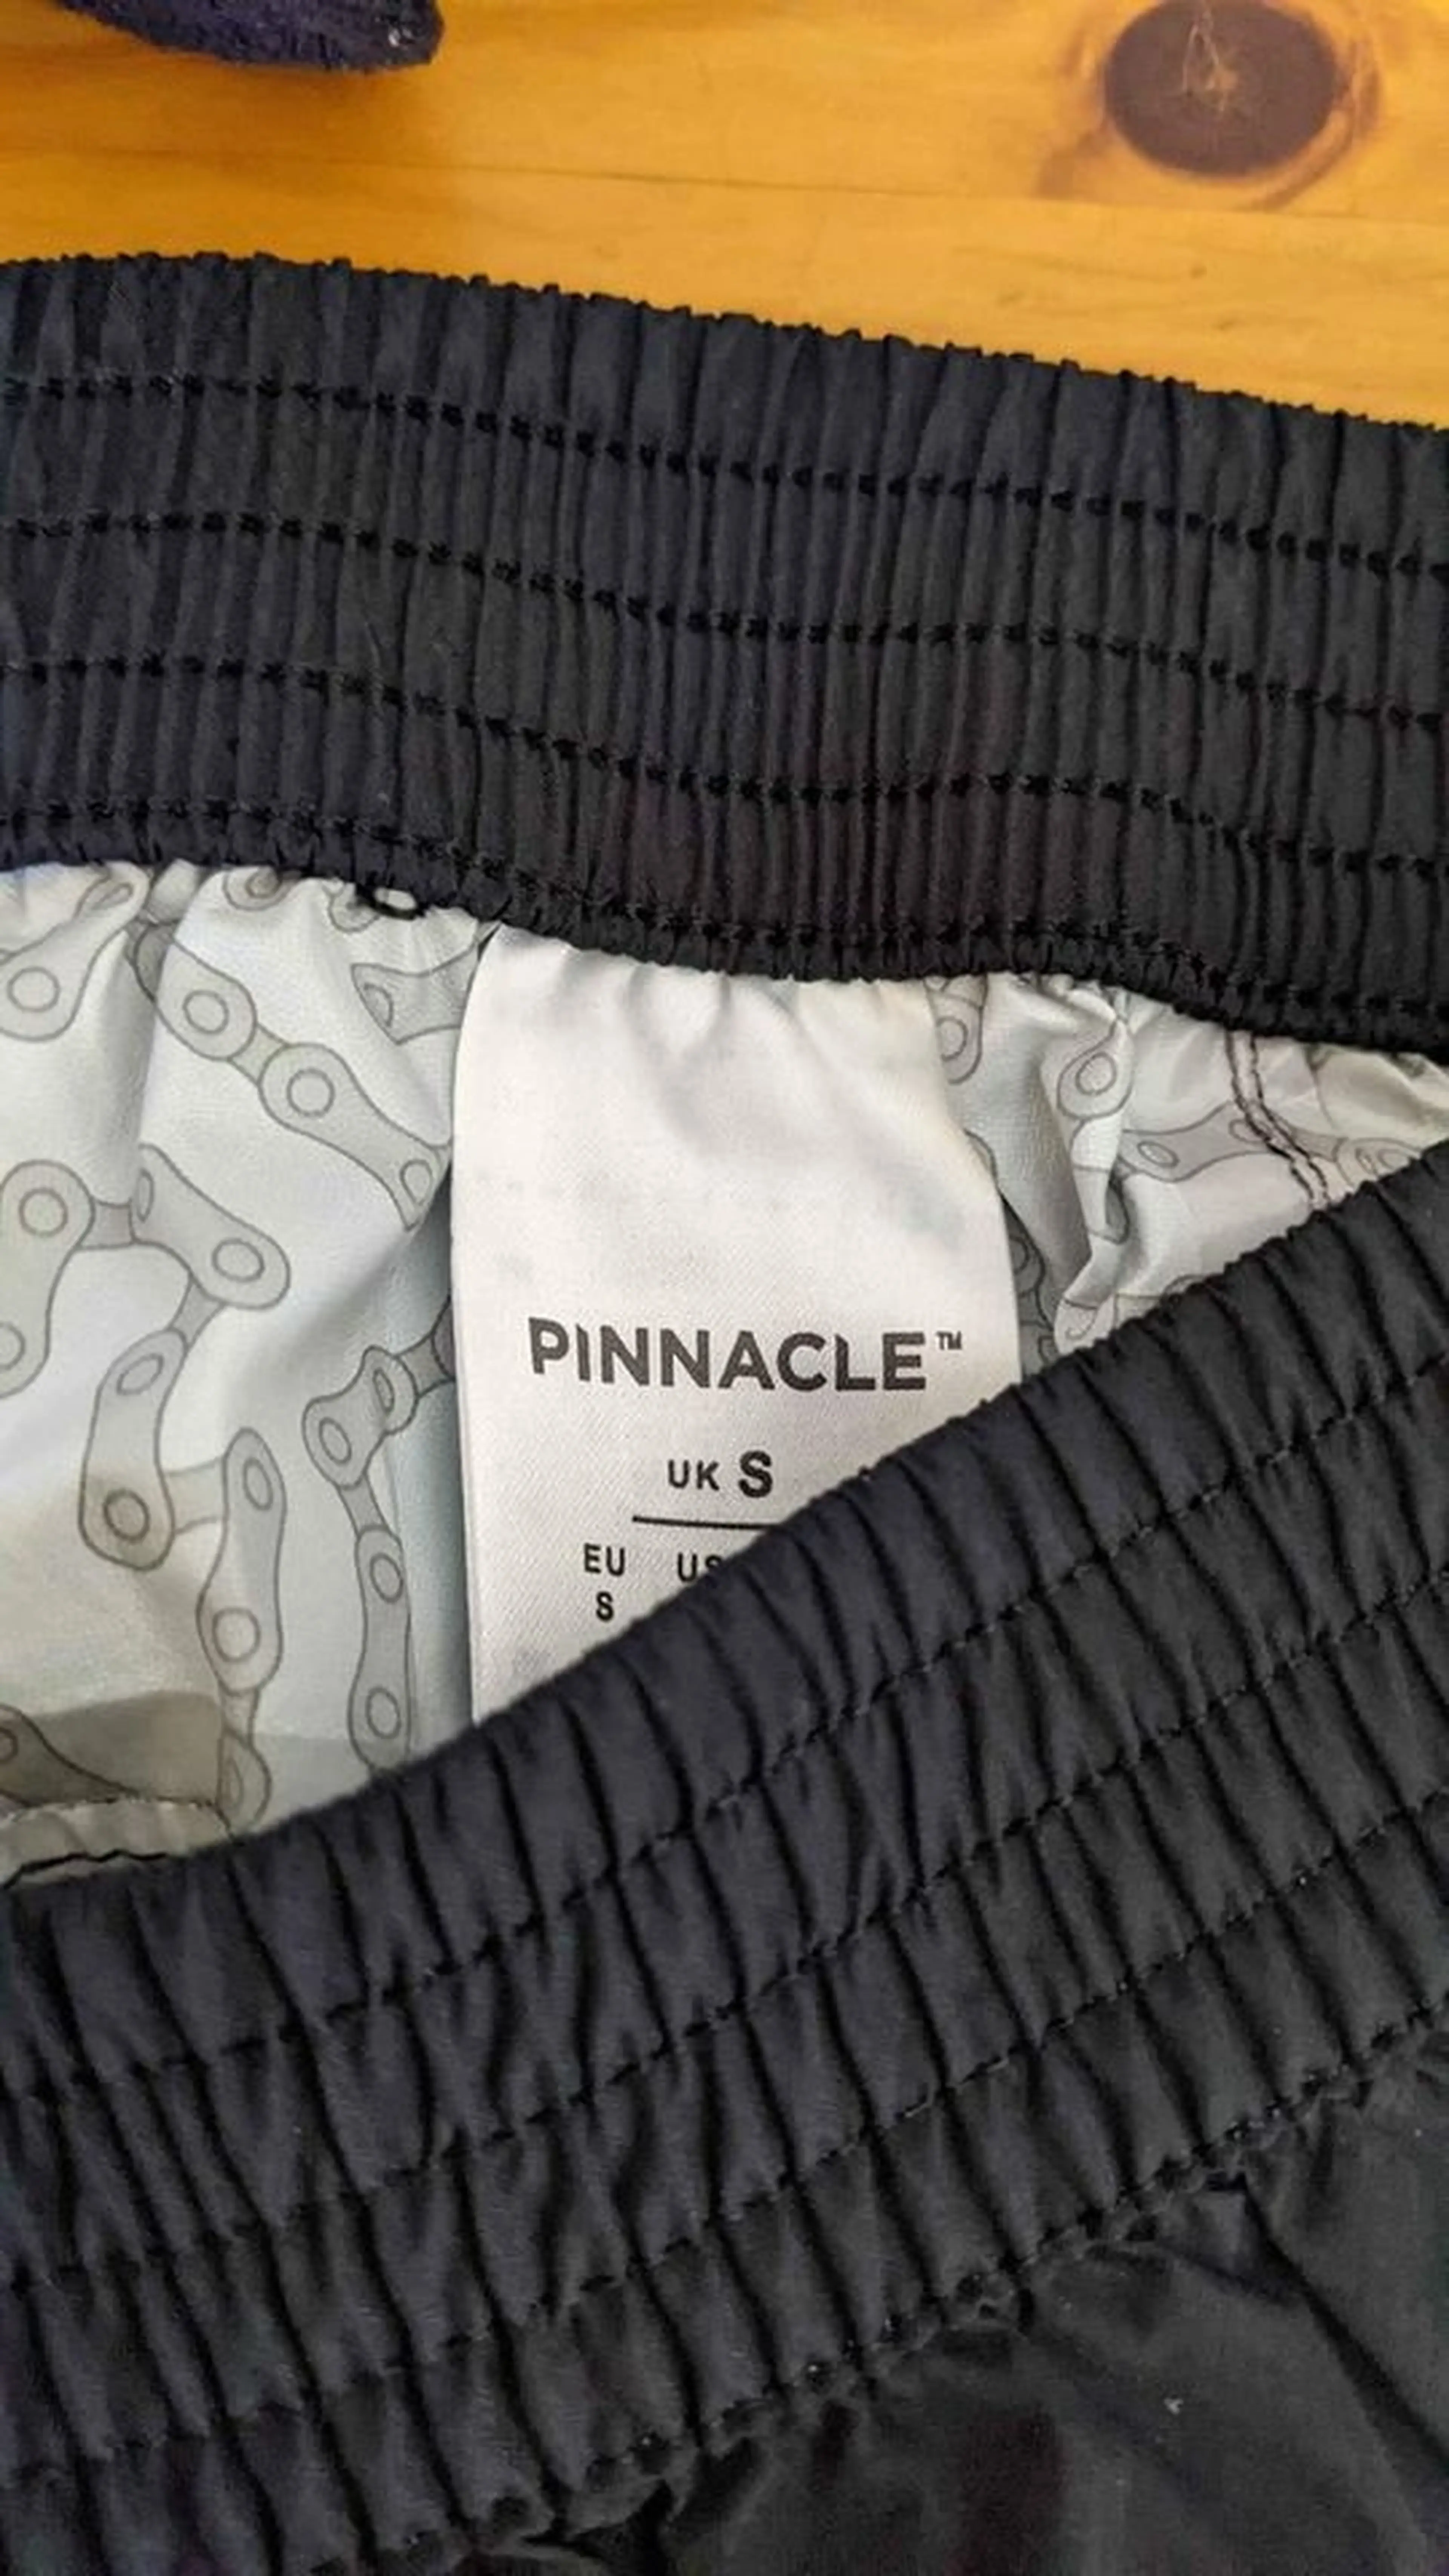 3. Pantaloni  impermeabili Pinnacle